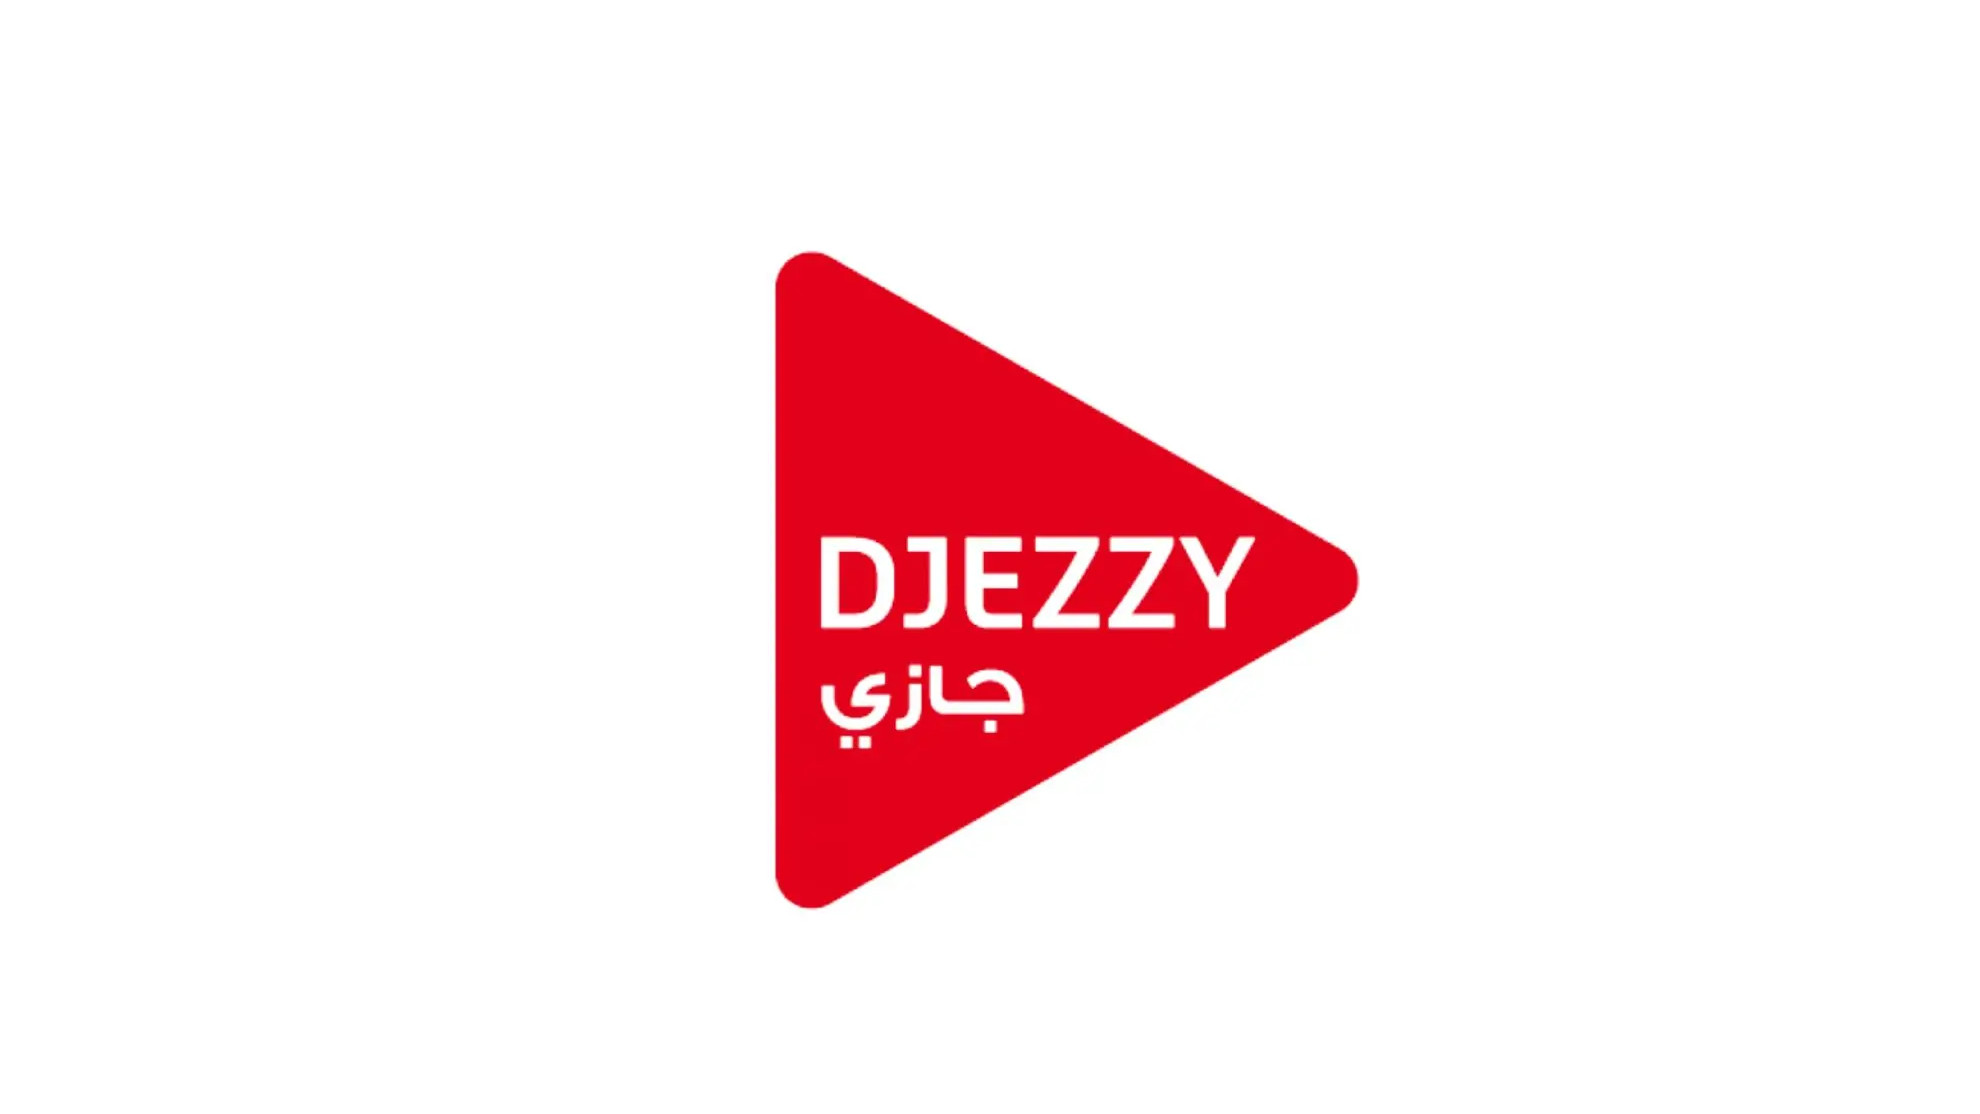 Djezzy 100 DZD Mobile Top-up DZ, $1.36